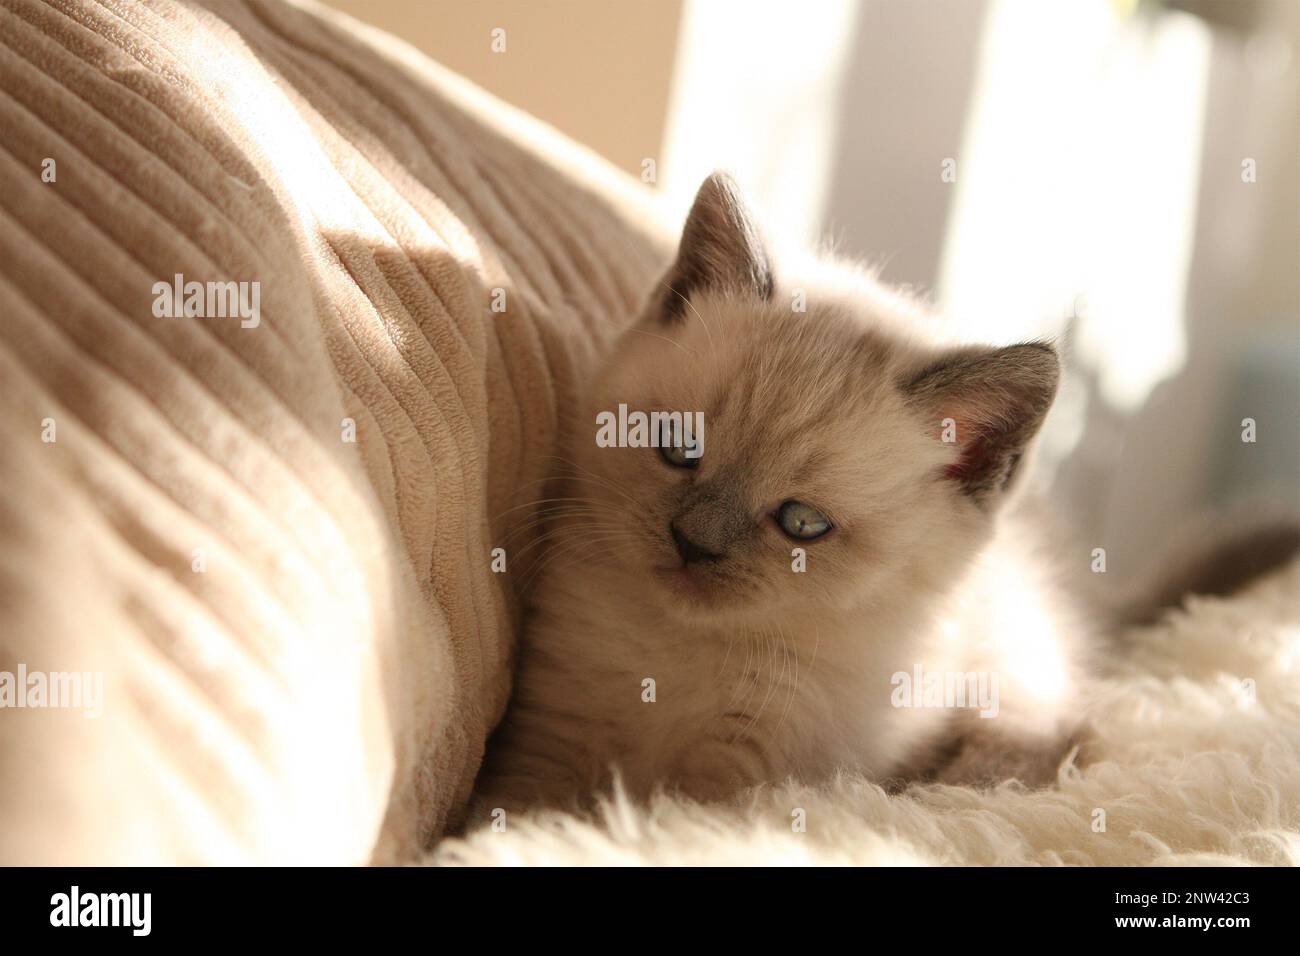 Britisch Kurzhaar Katze a häuslicher Umgebung. Foto Stock